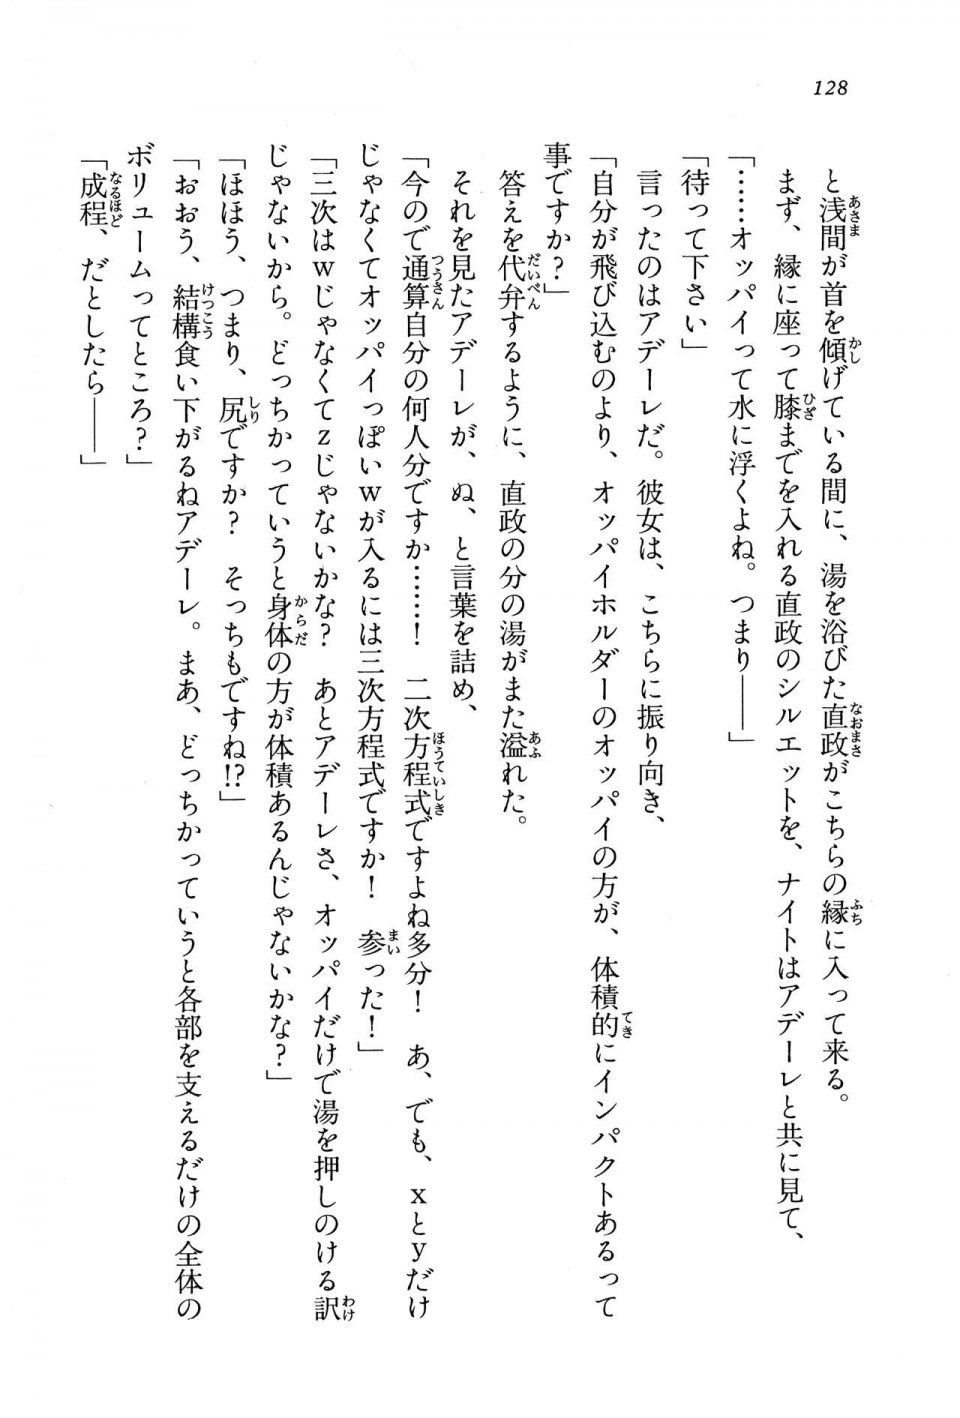 Kyoukai Senjou no Horizon BD Special Mininovel Vol 8(4B) - Photo #132